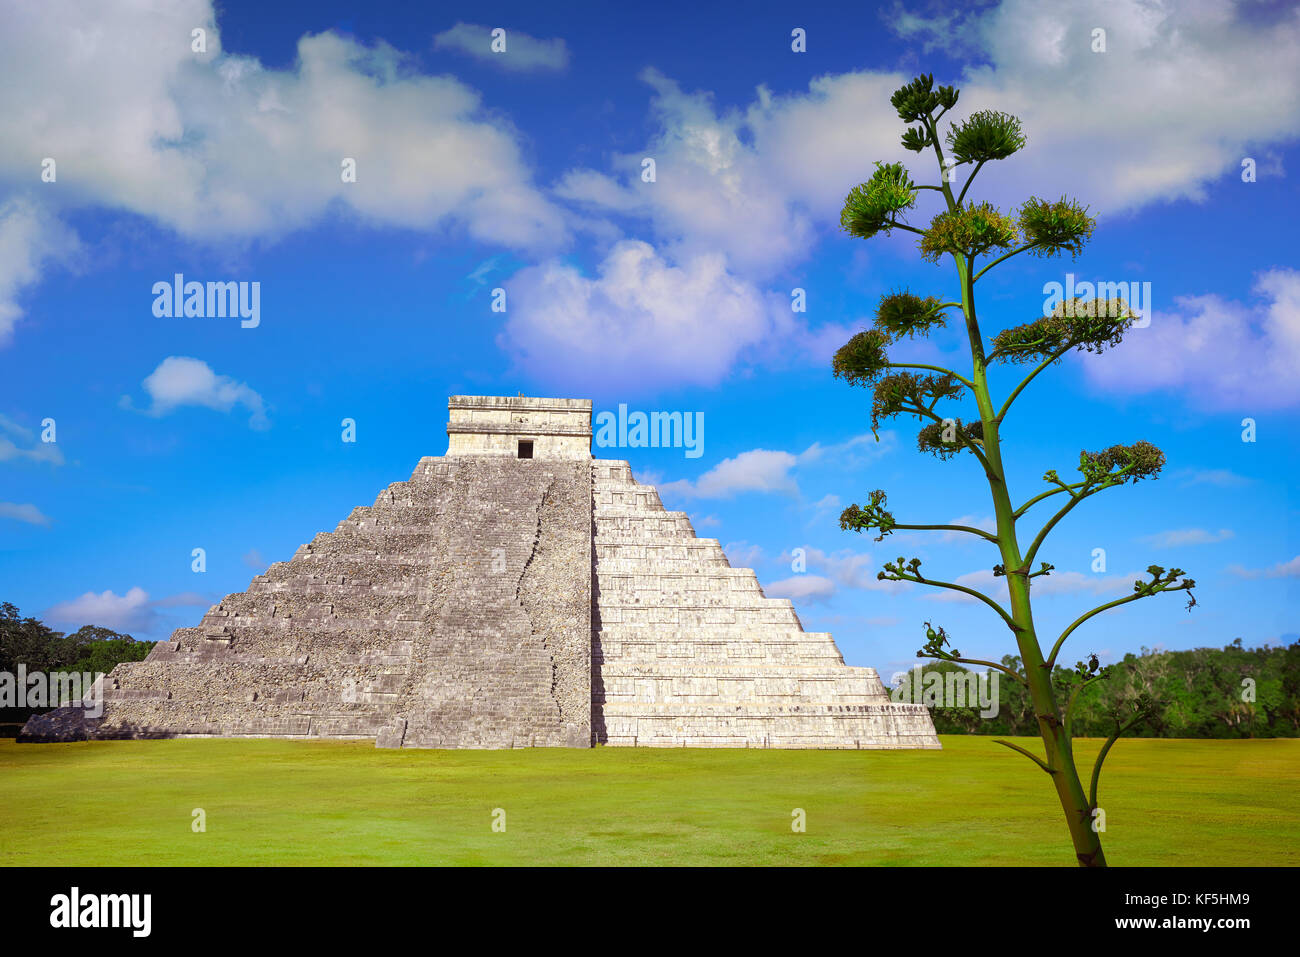 Chichen Itza pyramid El Templo Kukulcan temple in Mexico Yucatan Stock Photo